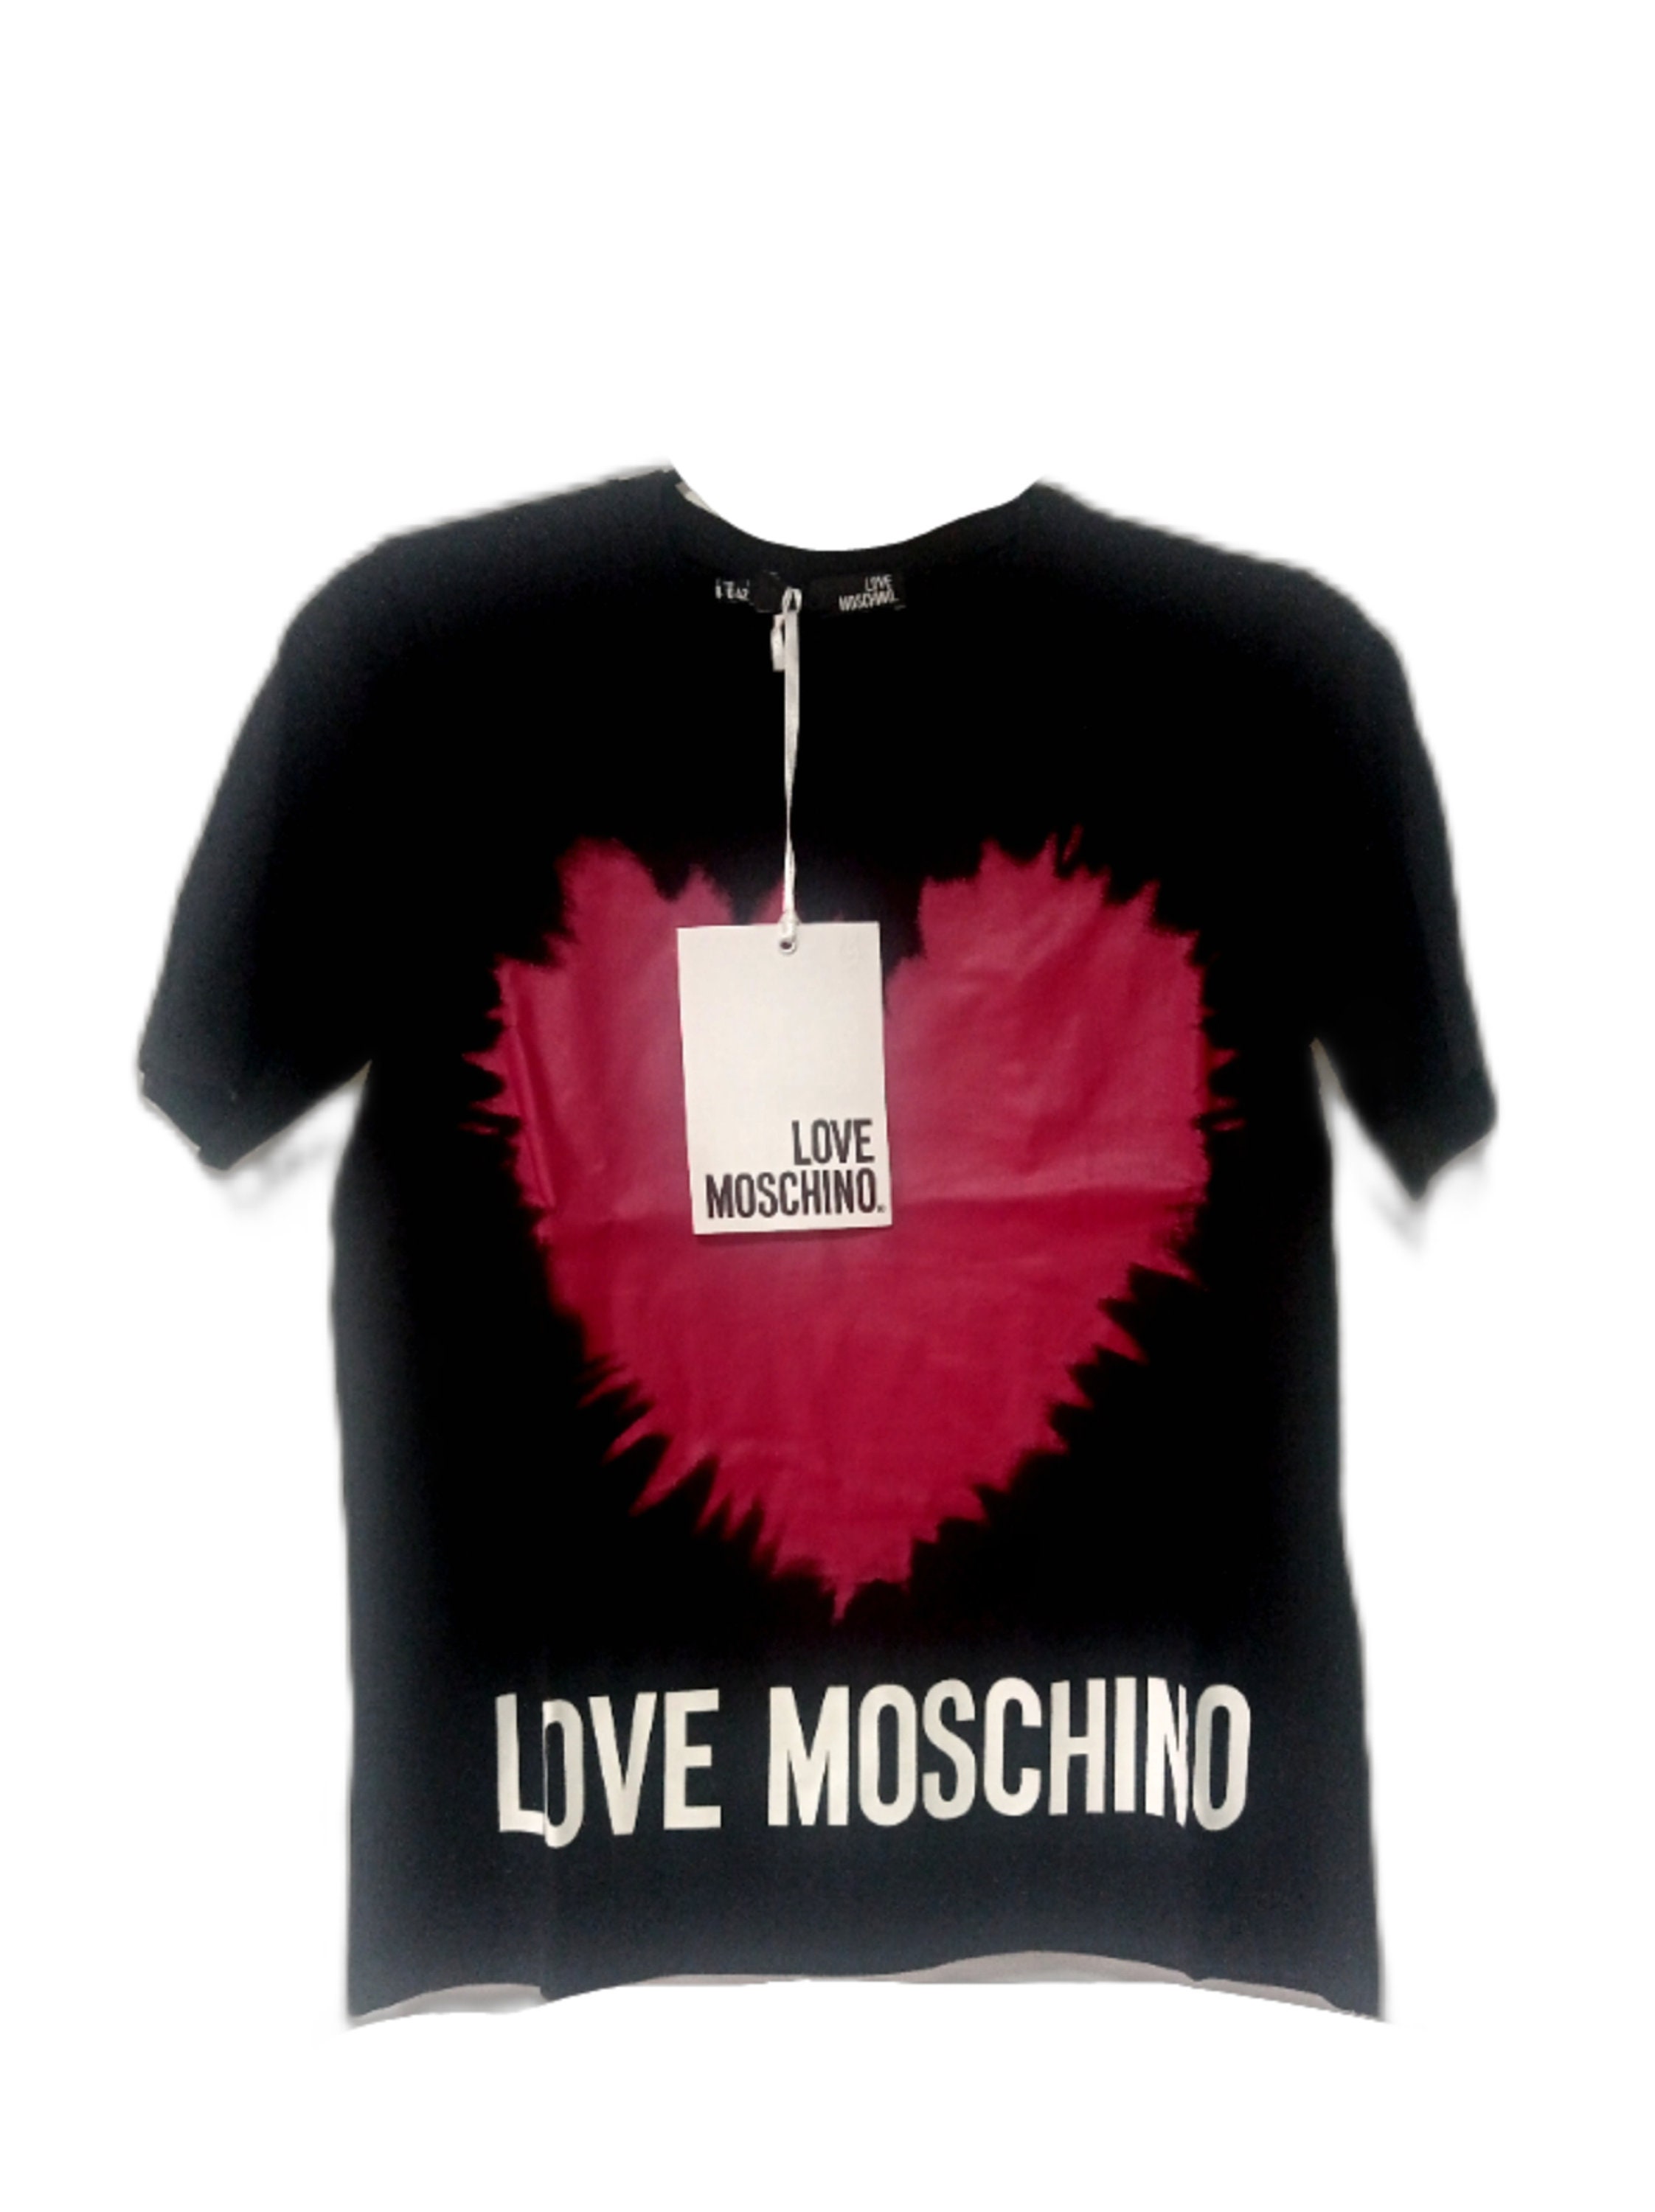 Love Moschino Barbie pink T-shirt dress metallic glitter heart graphic size  2